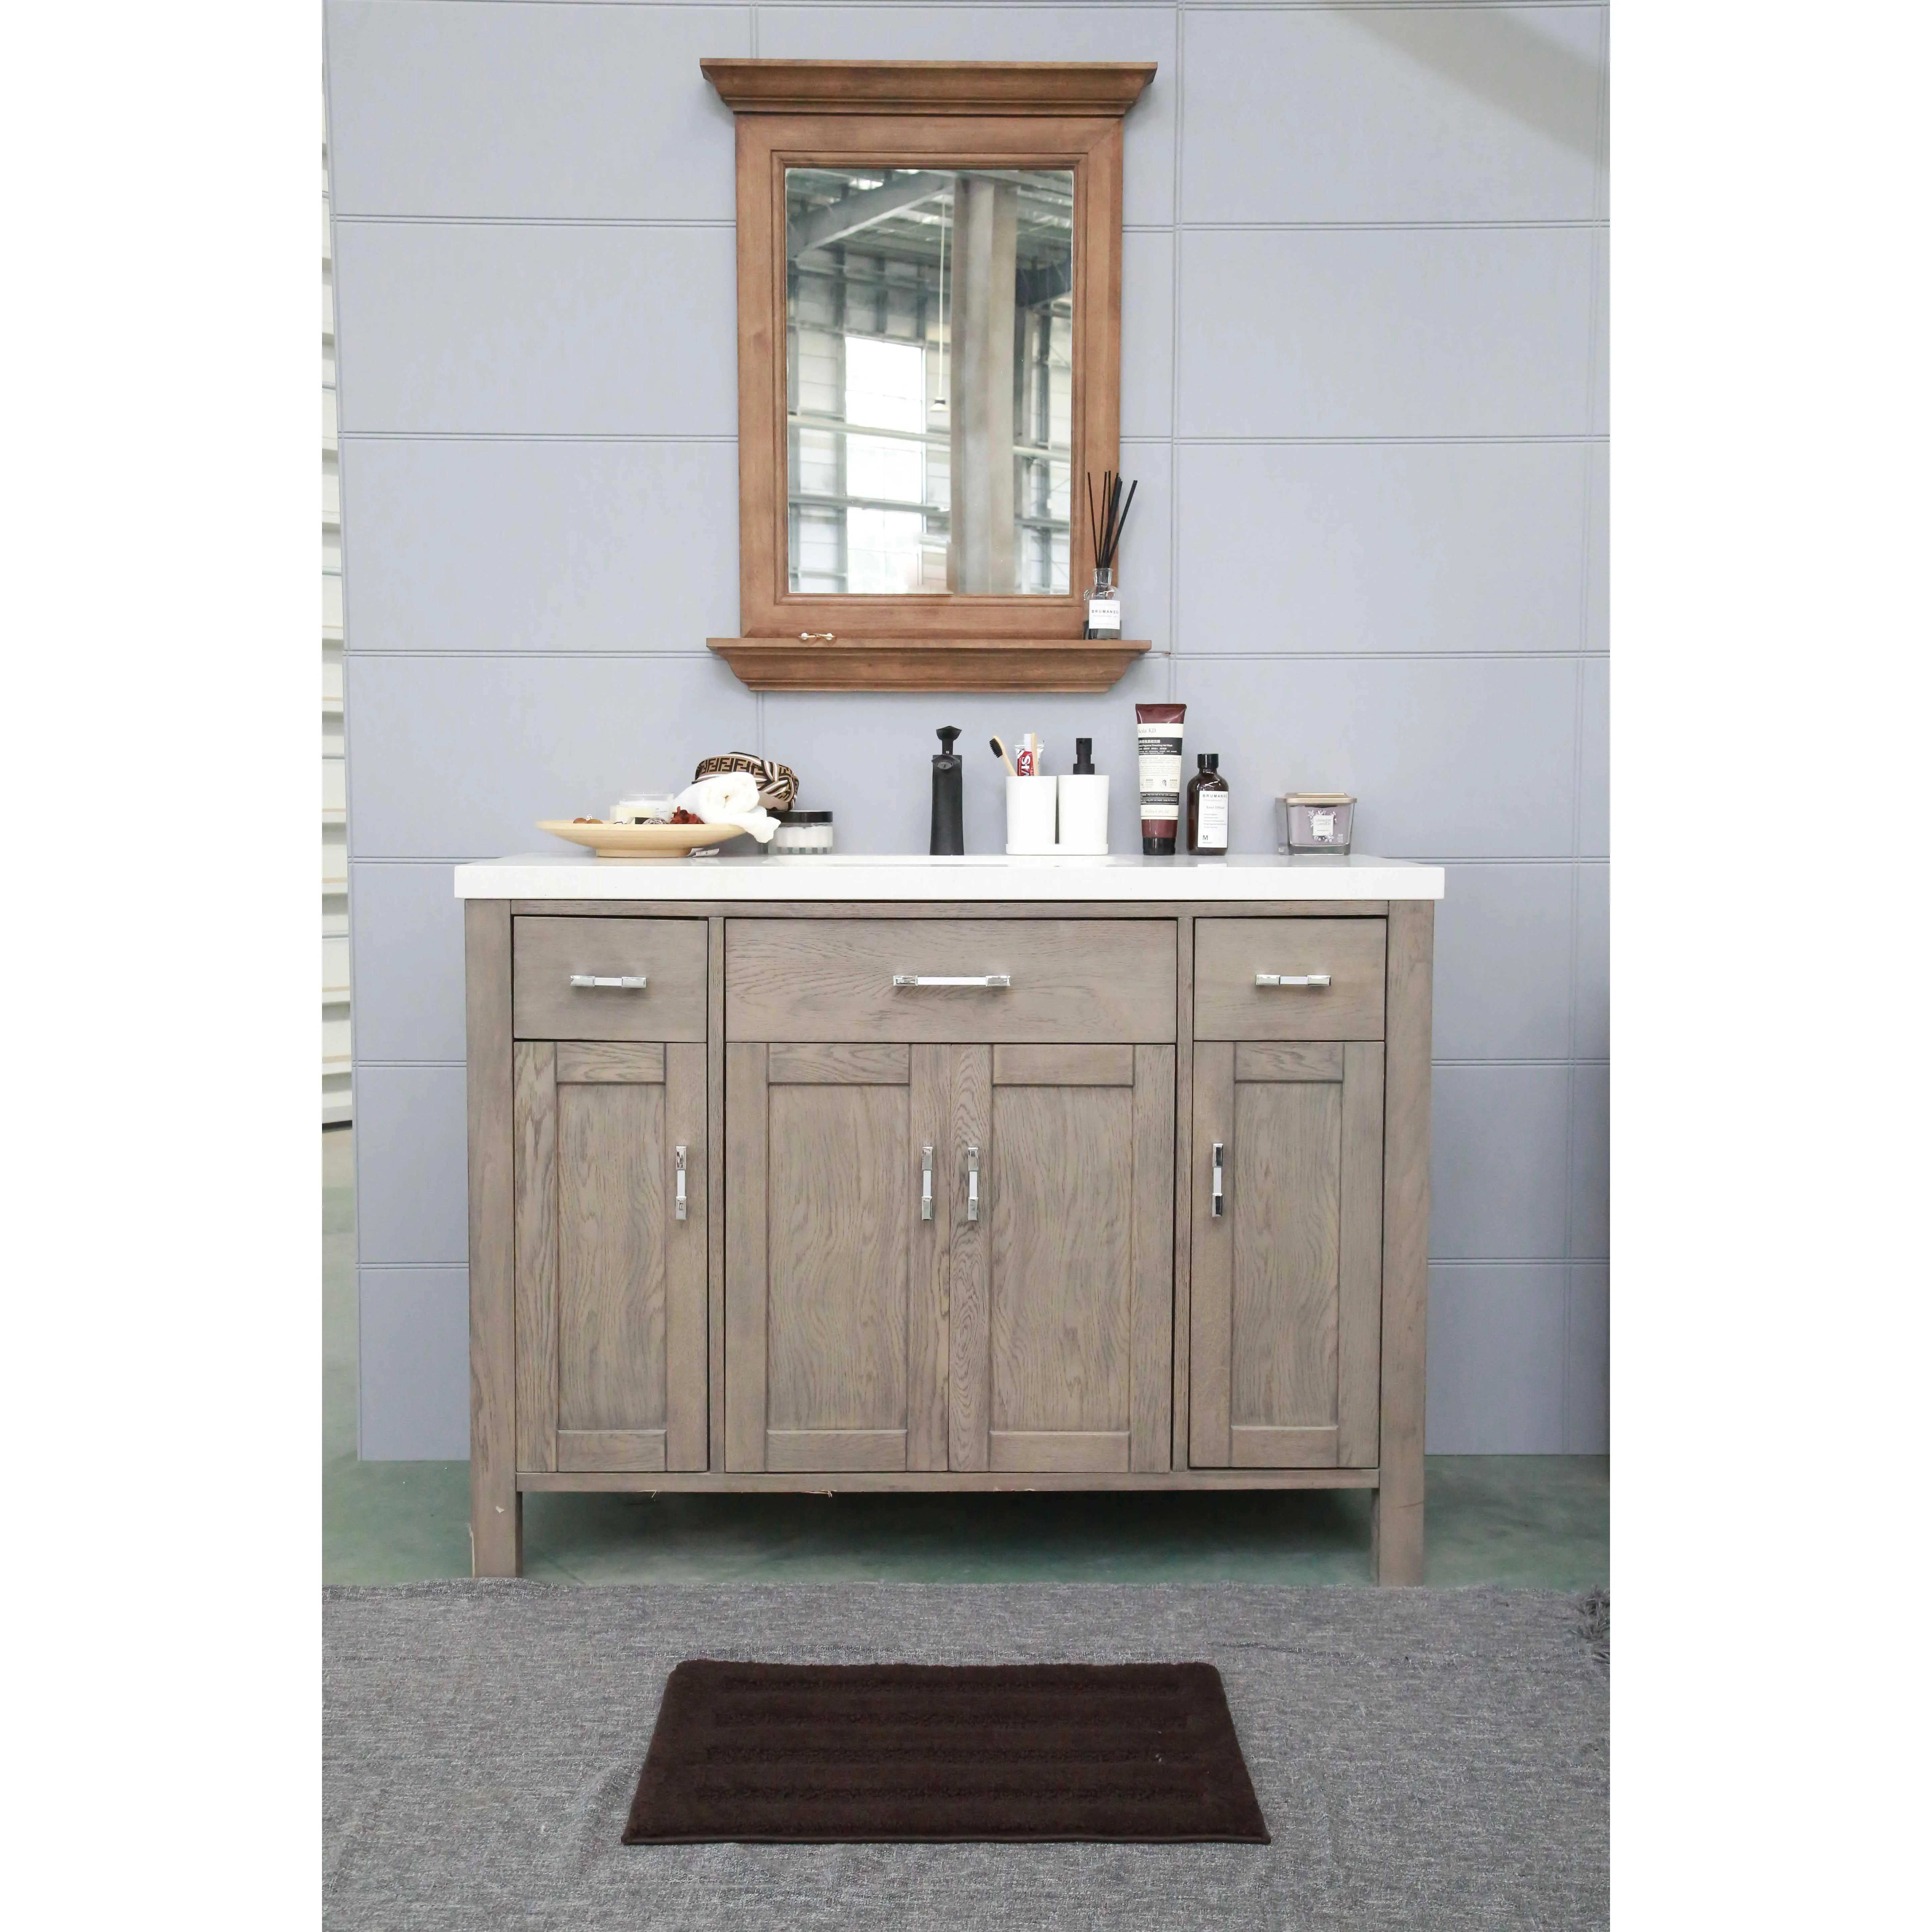 Wholesale Washroom Vanity Bathroom Cabinets In Brown Traditional Design 48 Inch Buy Bathroom Vanity Cabinet